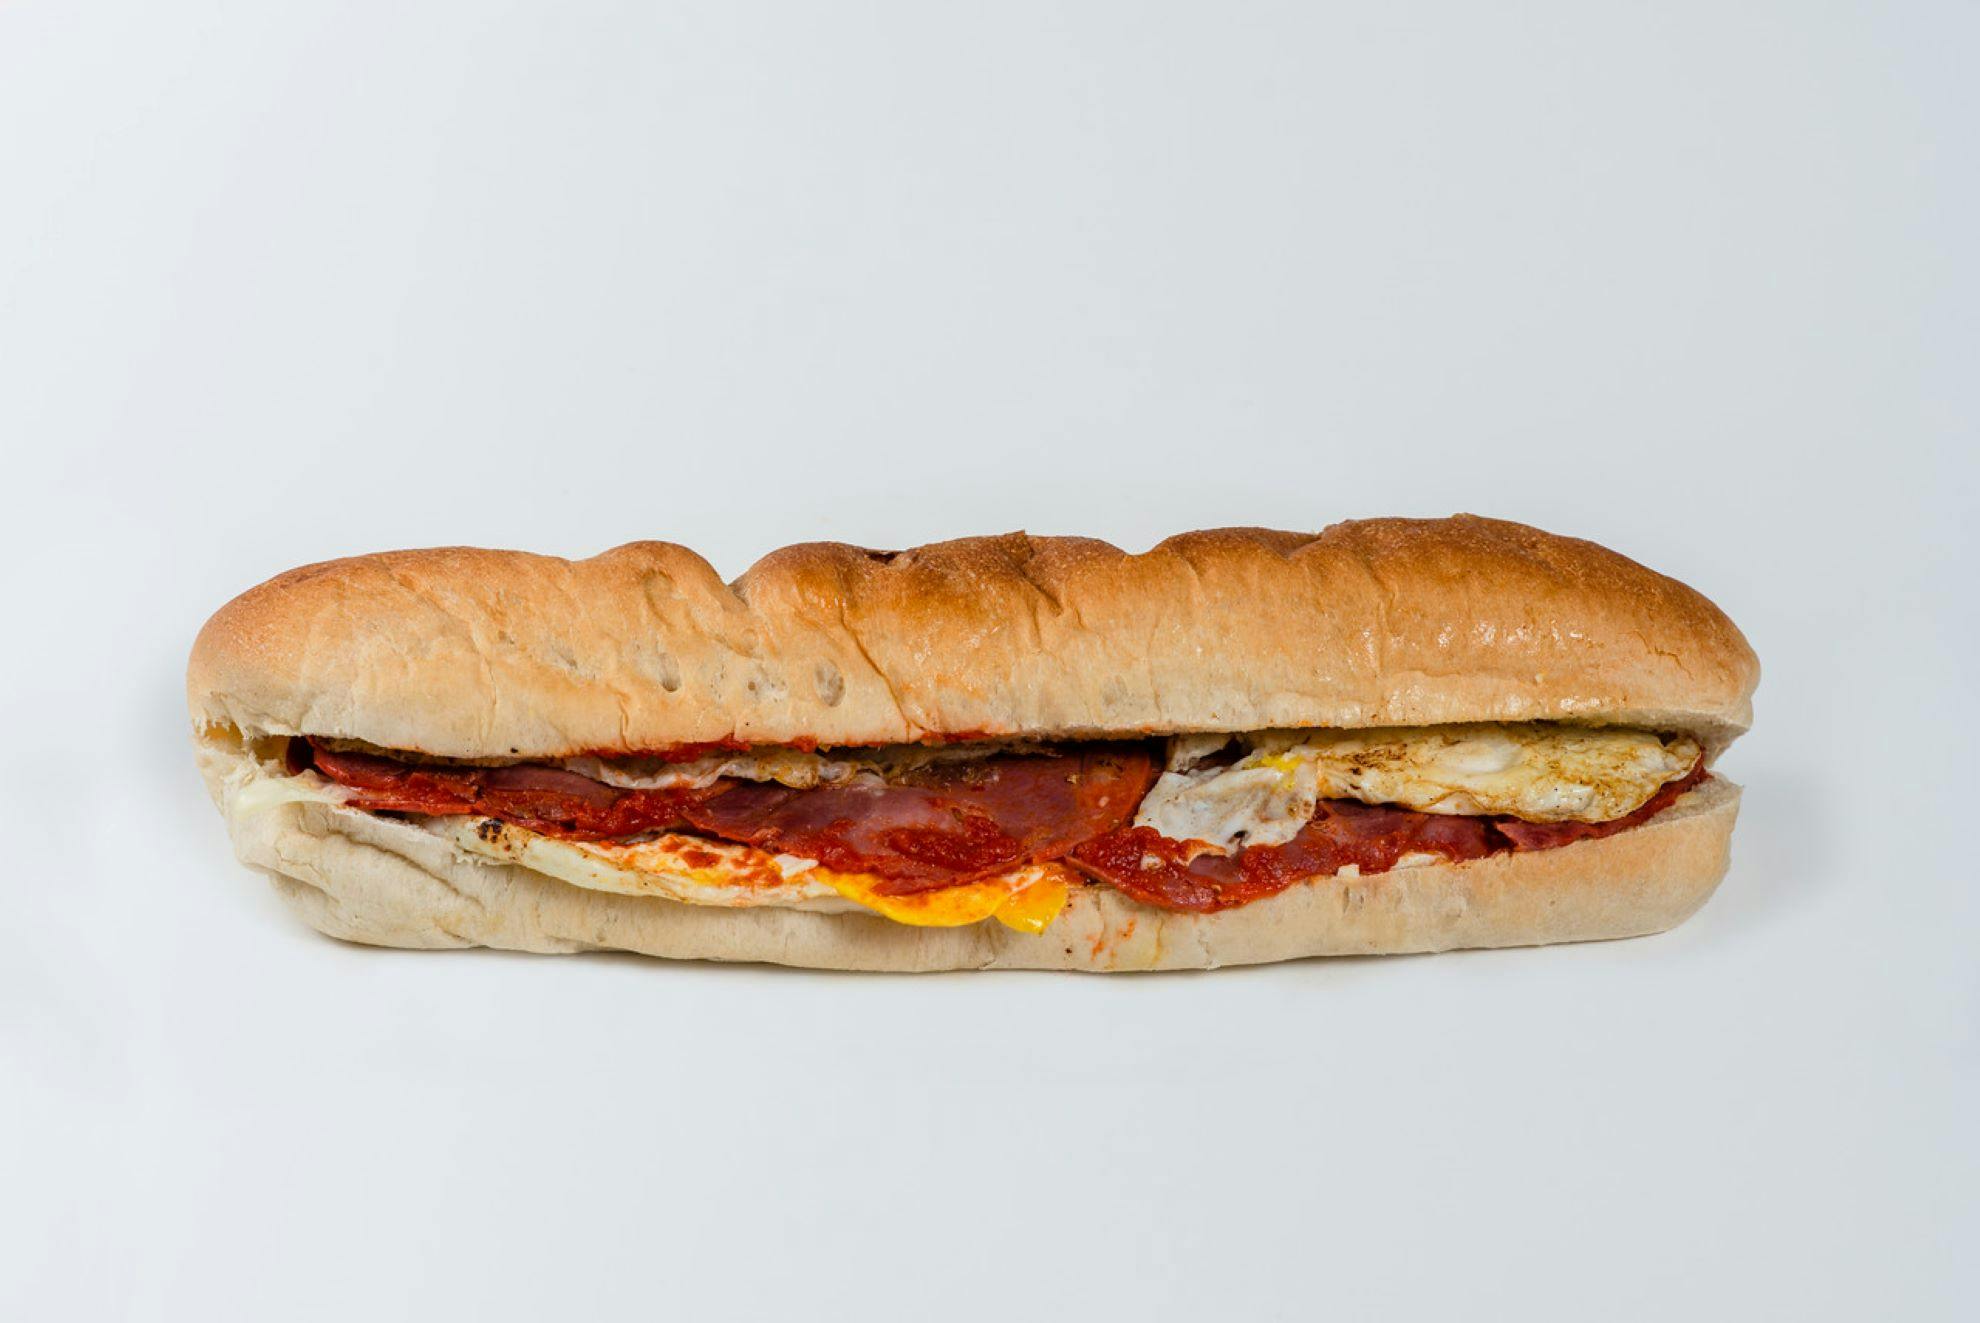 Italian Stallion Breakfast Sandwich from Gandolfo's New York Deli - Orem in Orem, UT